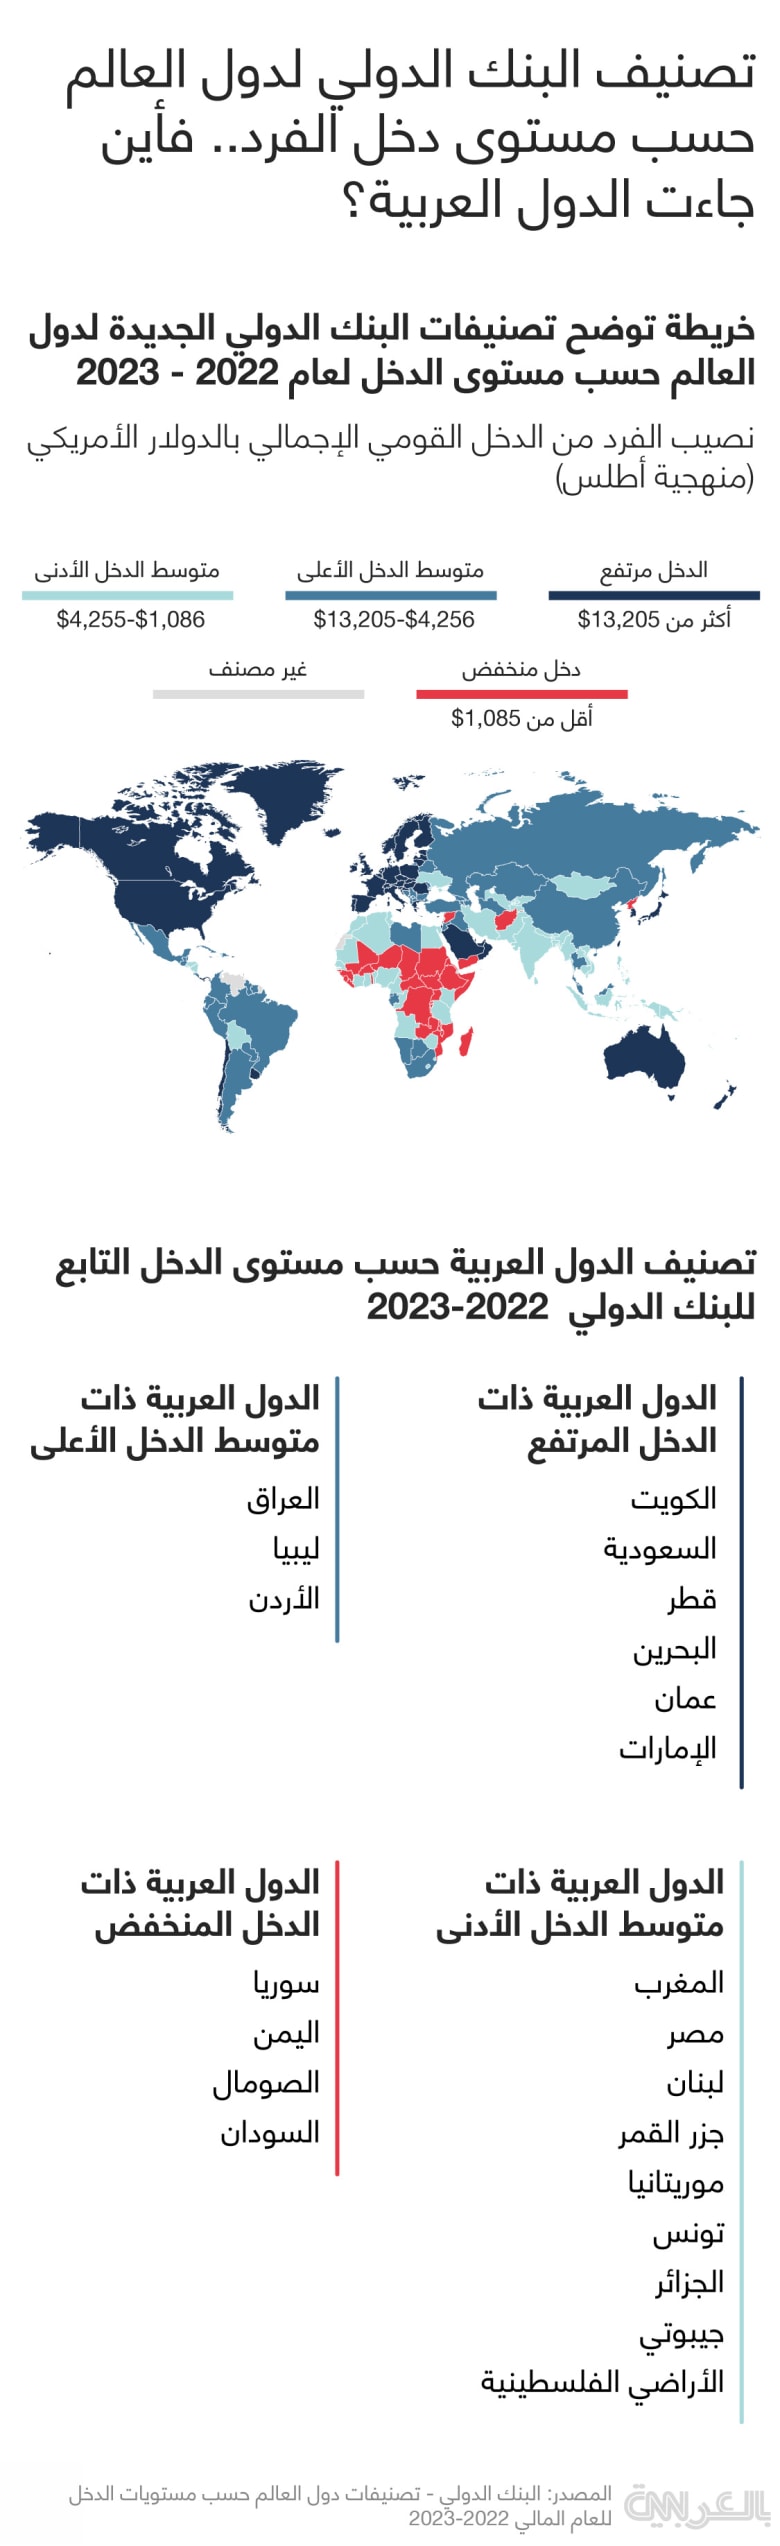 Arab-countries-income-2022-2023